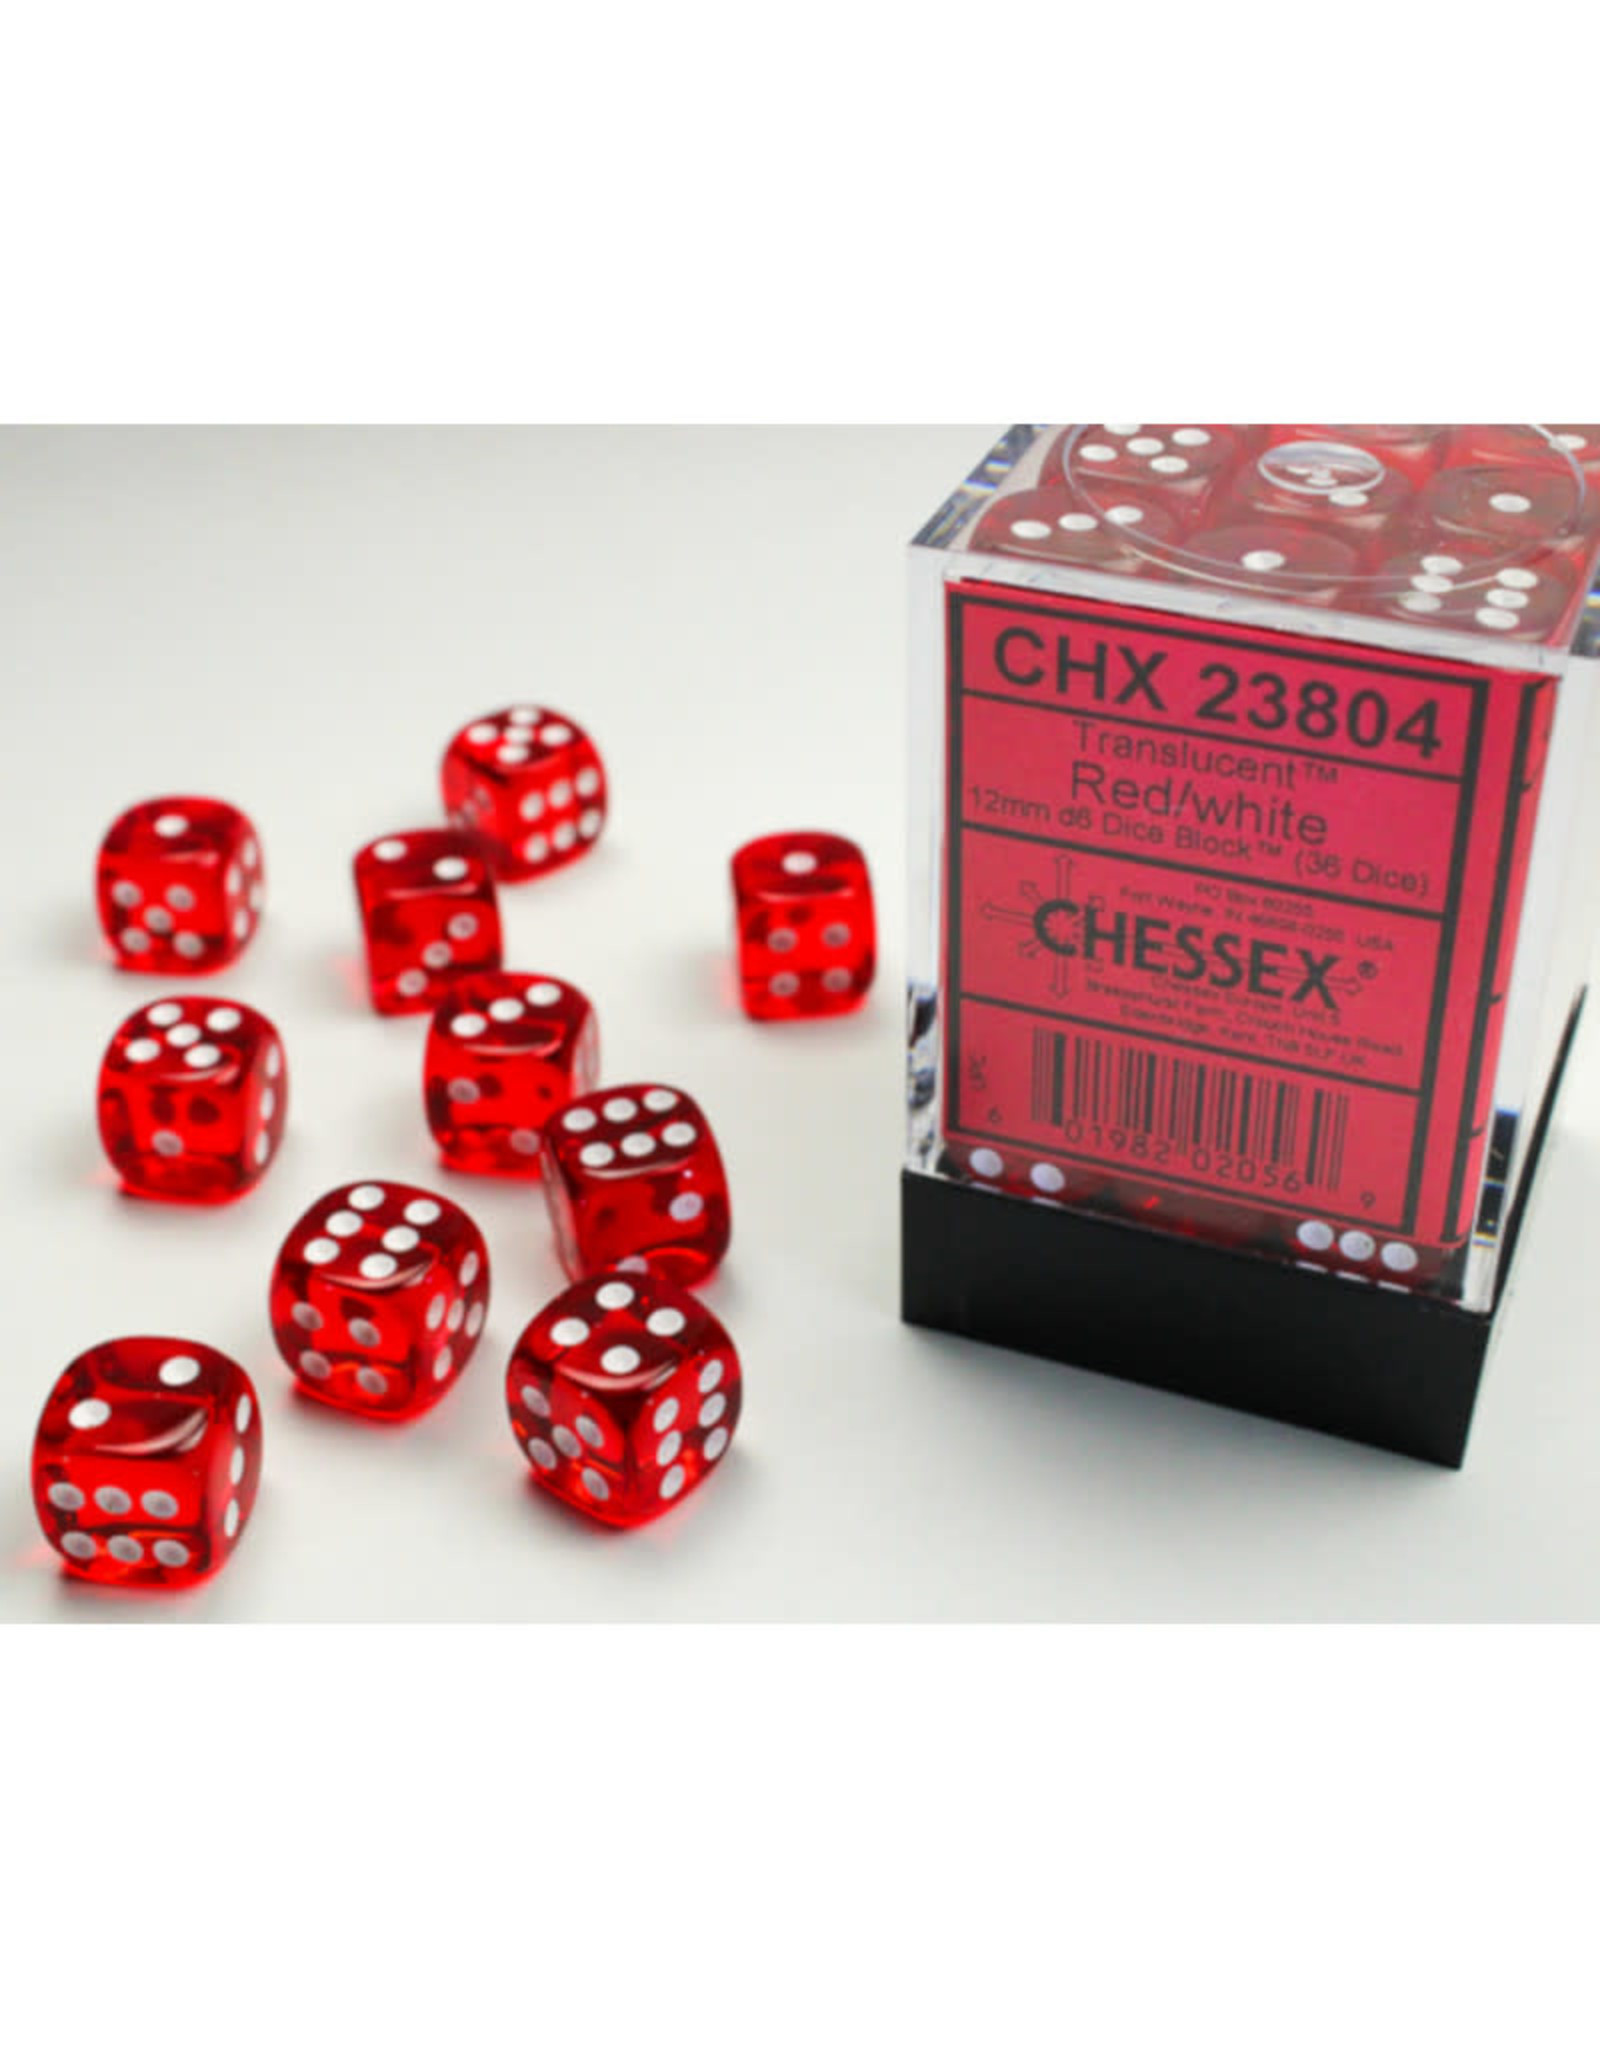 Chessex D6 Dice: 12mm Translucent Red(36)